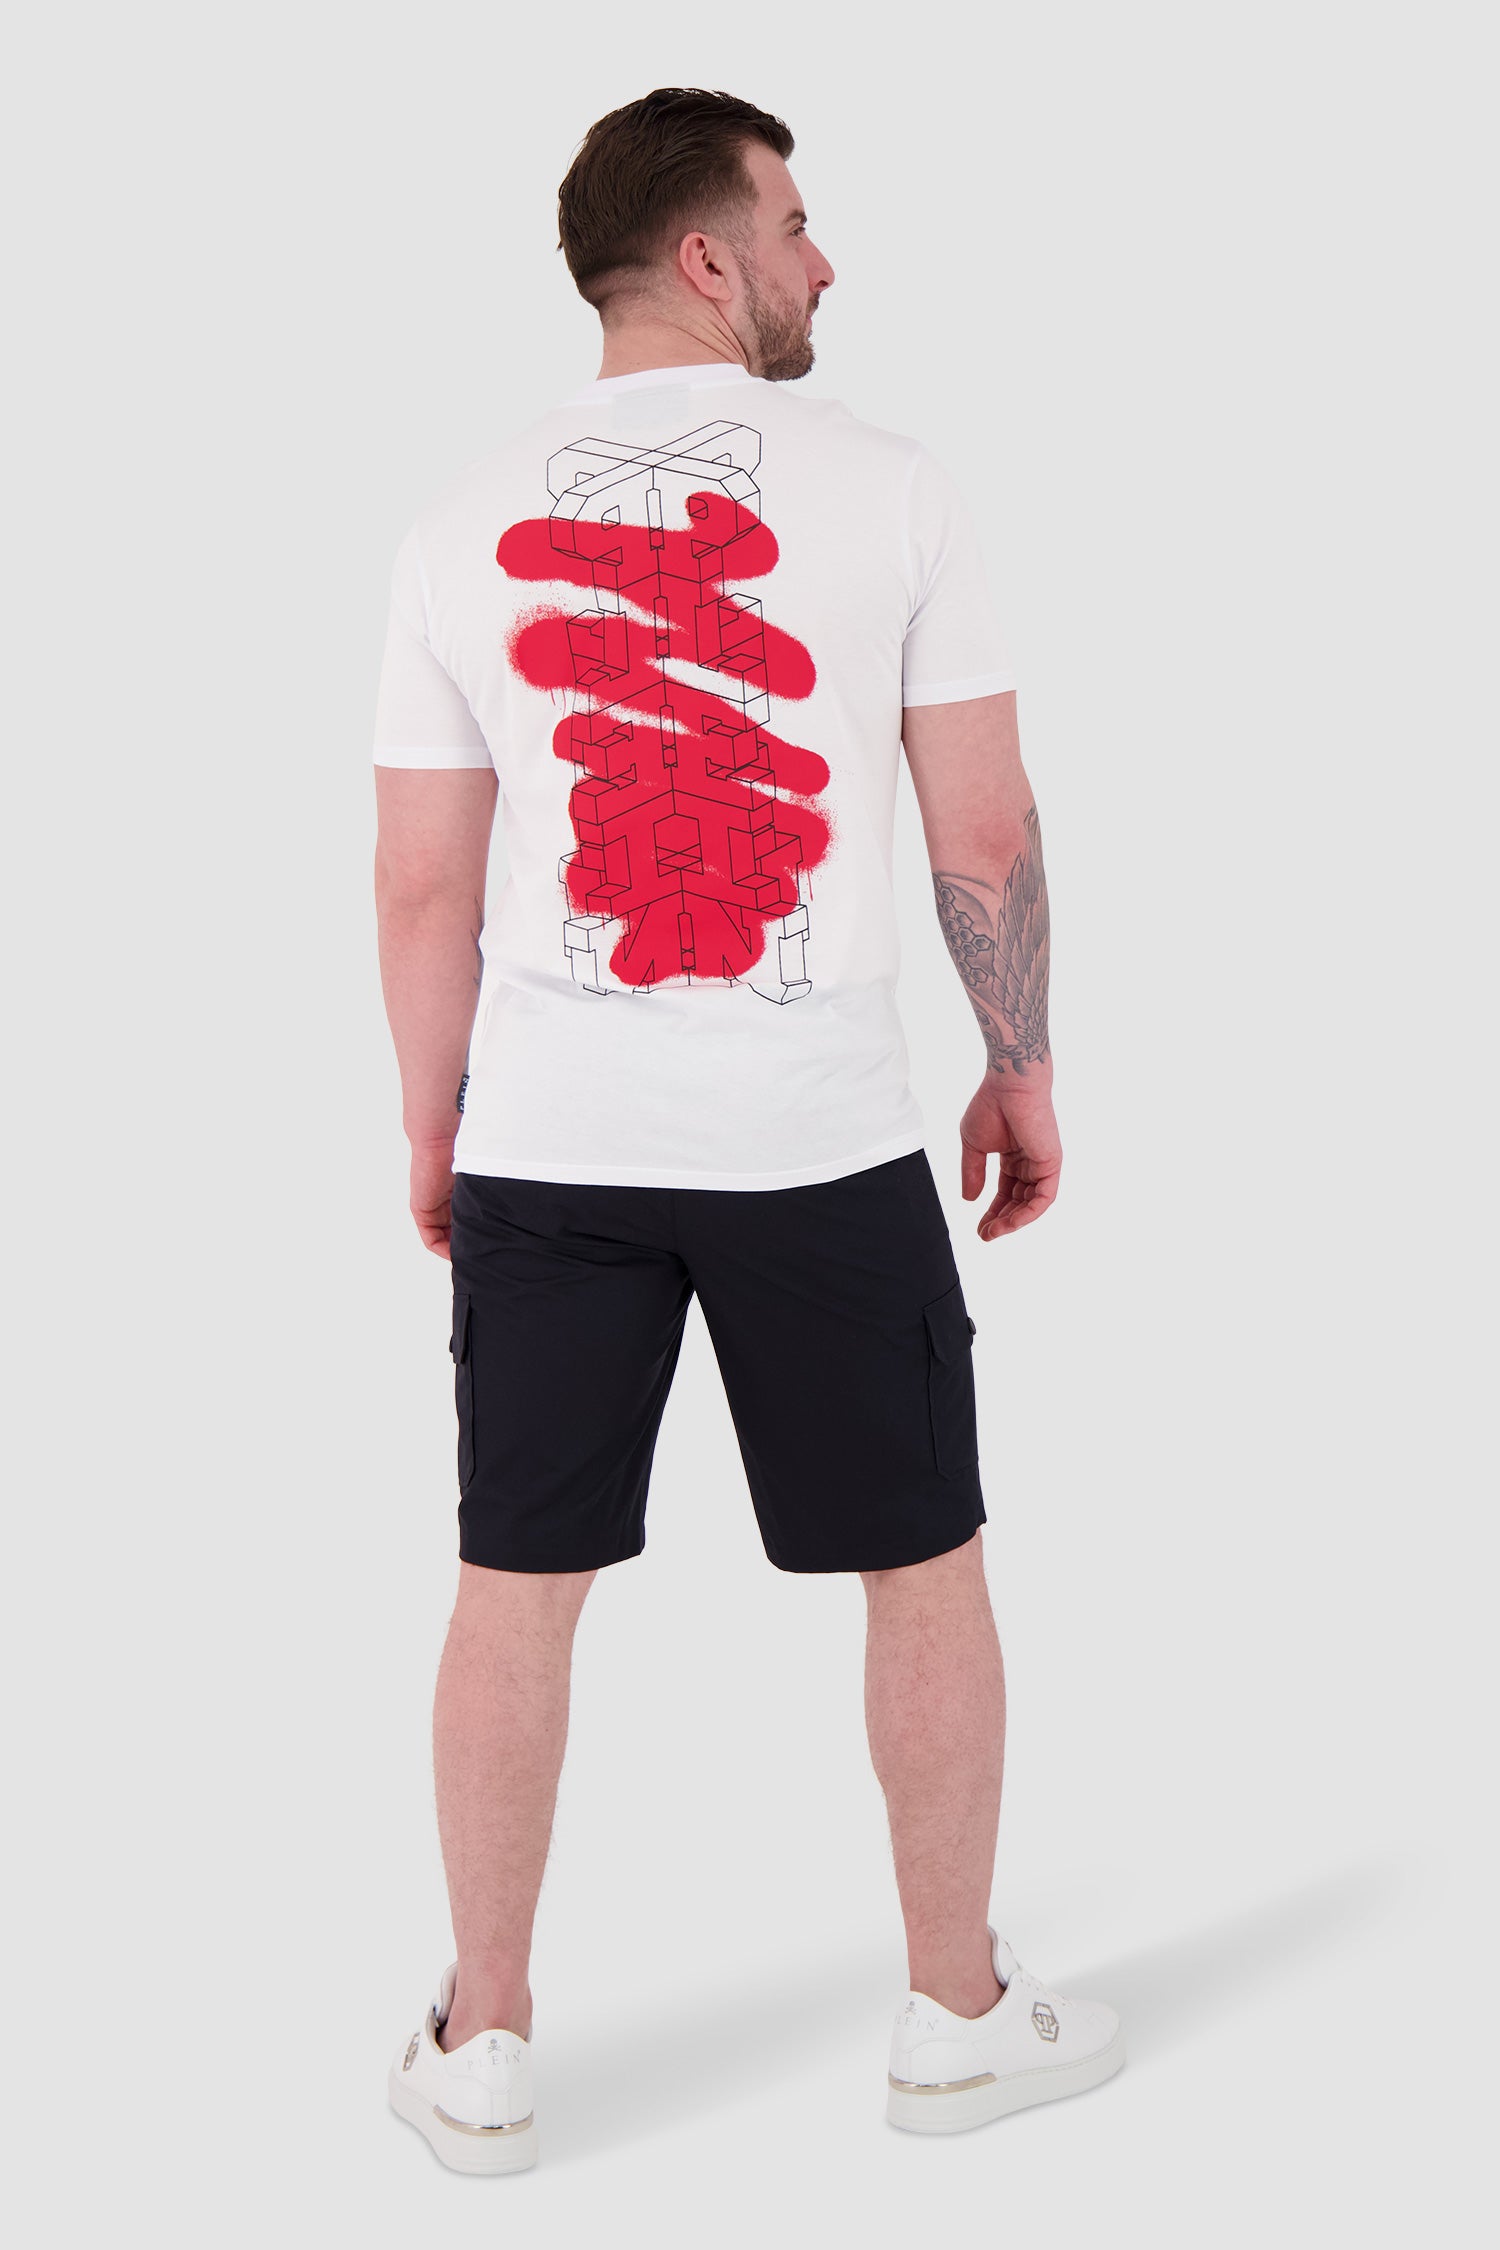 Philipp Plein White Round Neck SS PAK T-Shirt